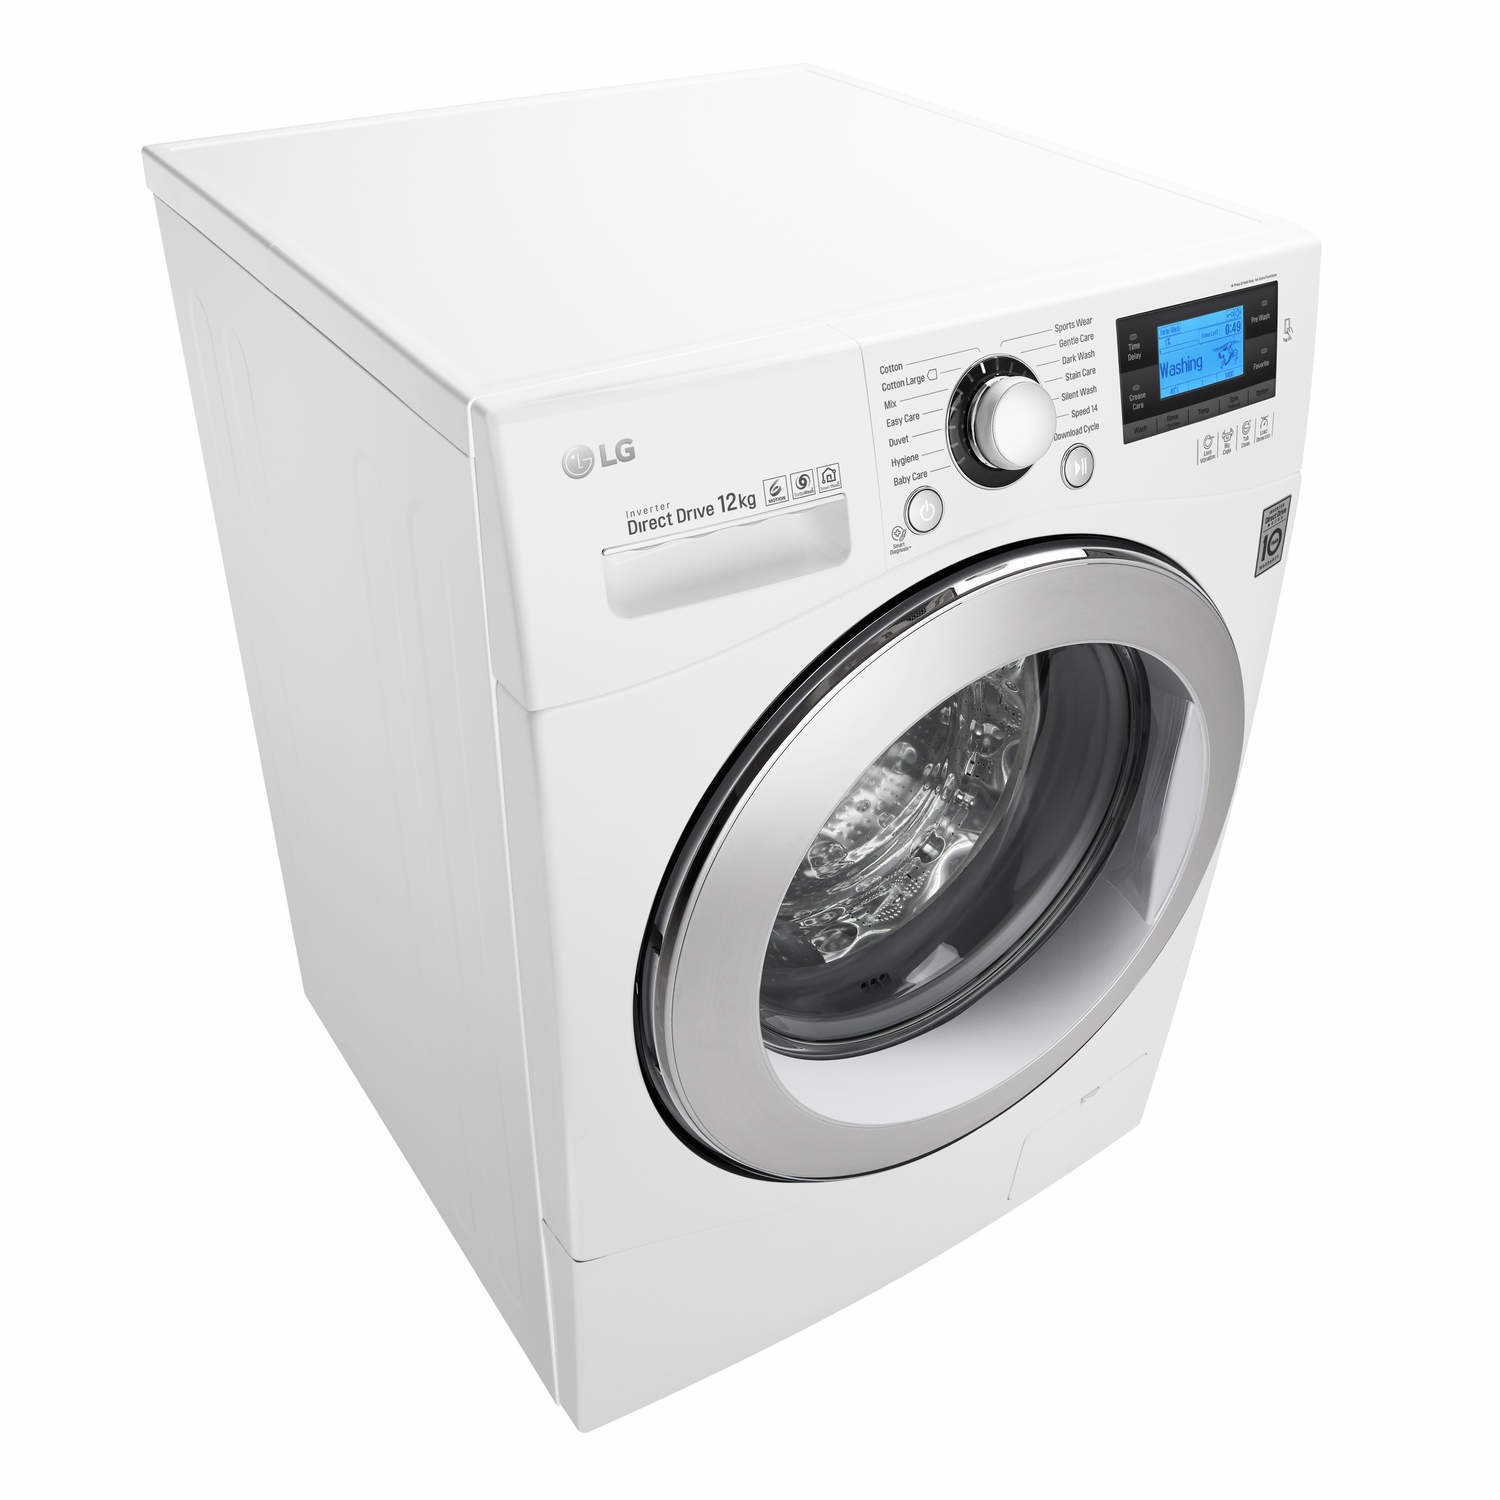 LG Direct Drive 12kg 1400rpm Freestanding Washing Machine White | Direct